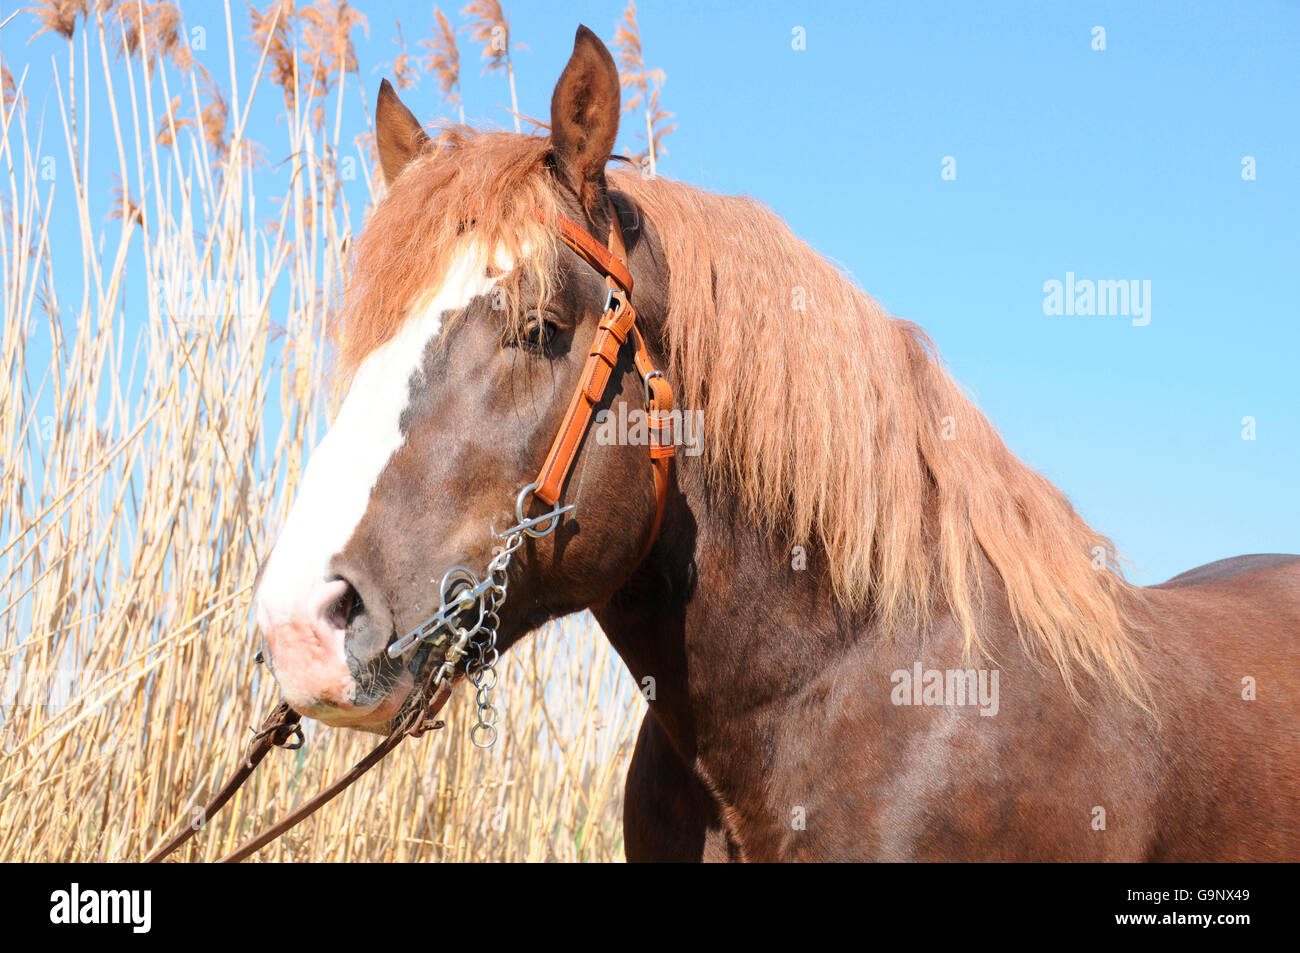 Breton Horse, stallion / Draft Horse, Draught Horse Stock Photo